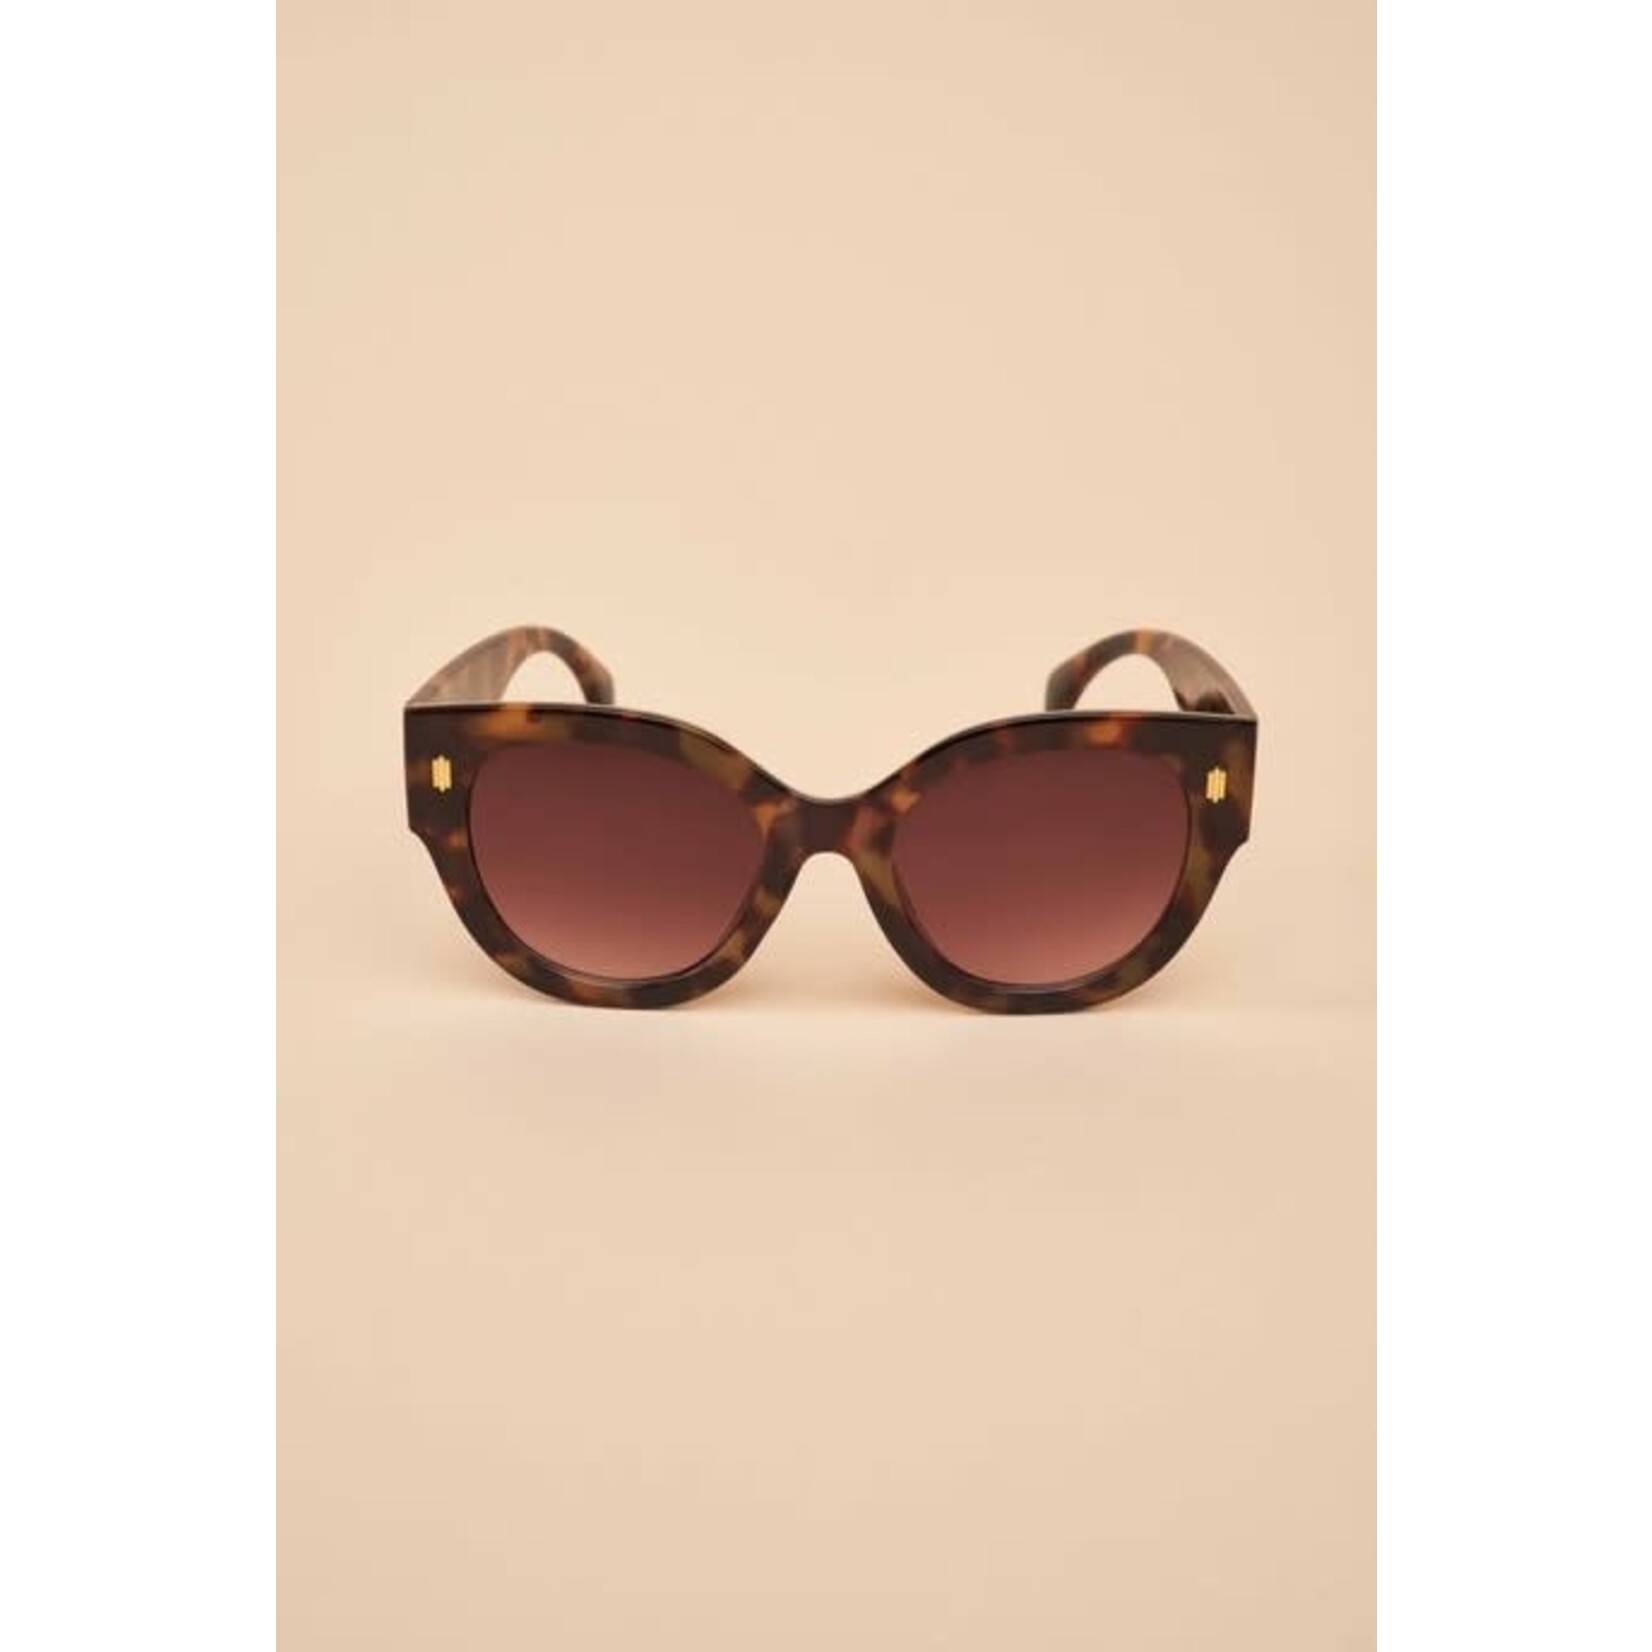 Powder Bailey Limited Edition Sunglasses in Tortoiseshell